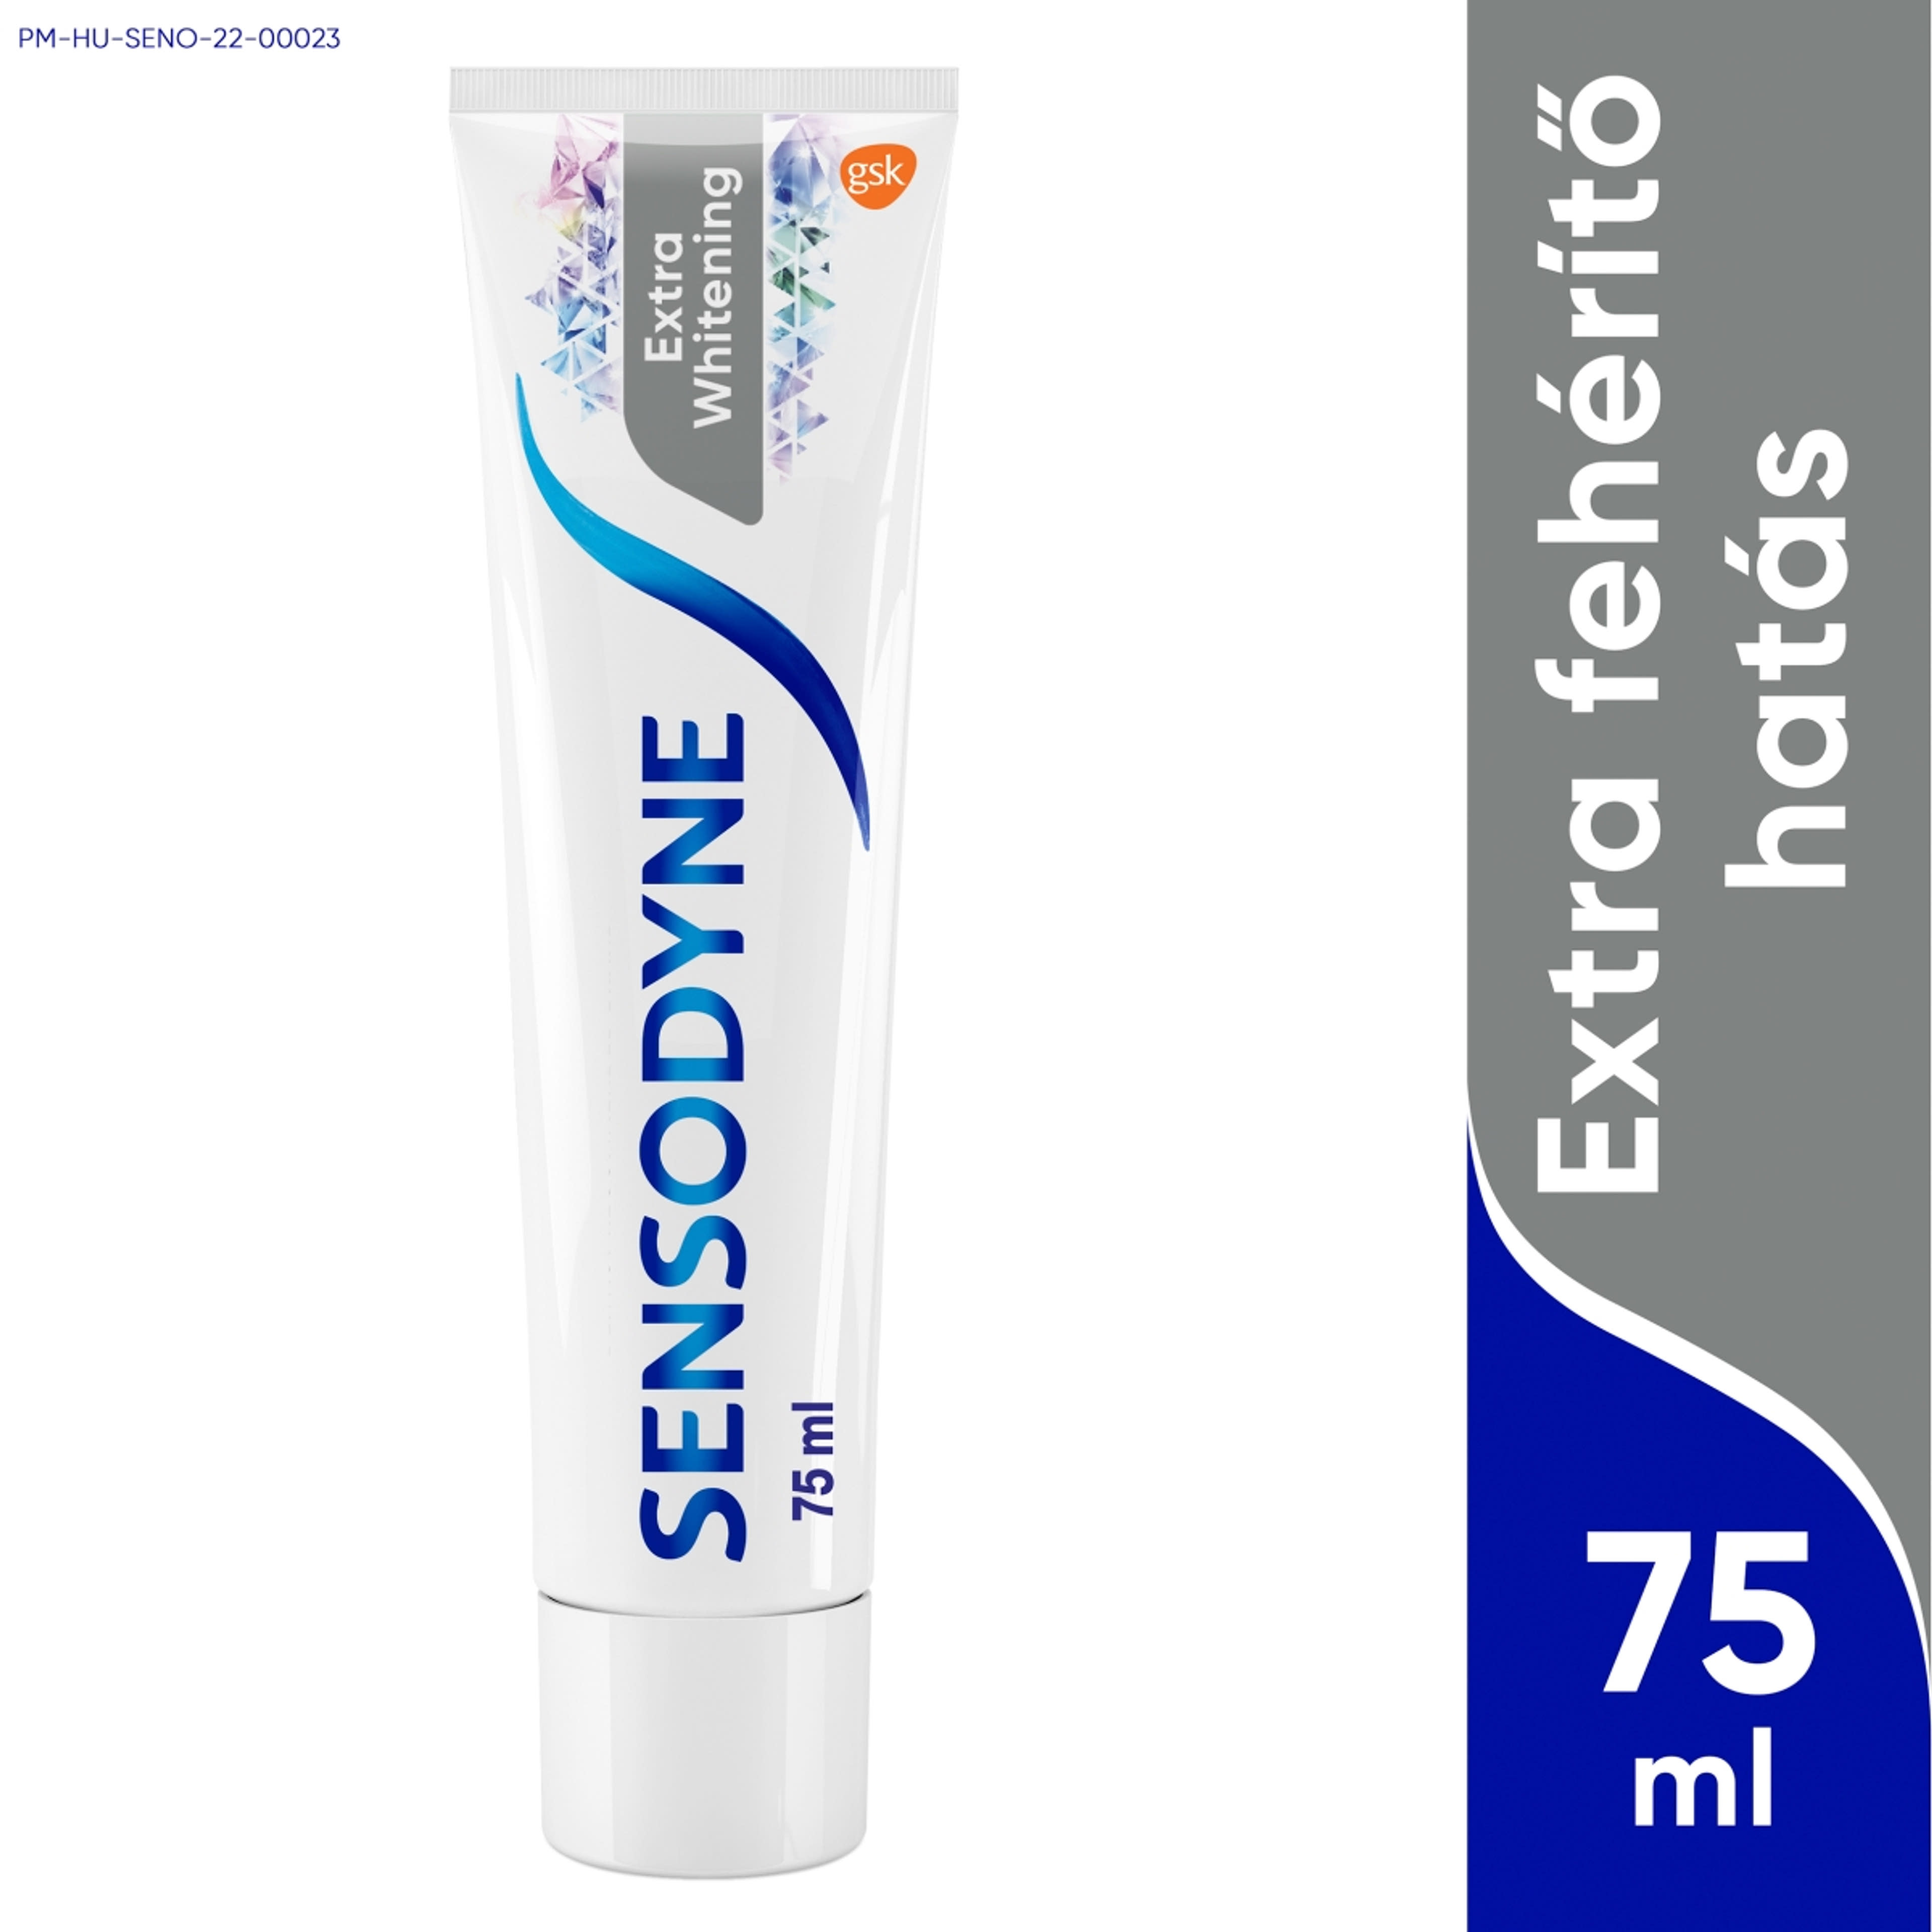 Sensodyne Extra Whitening fogkrém - 75 ml